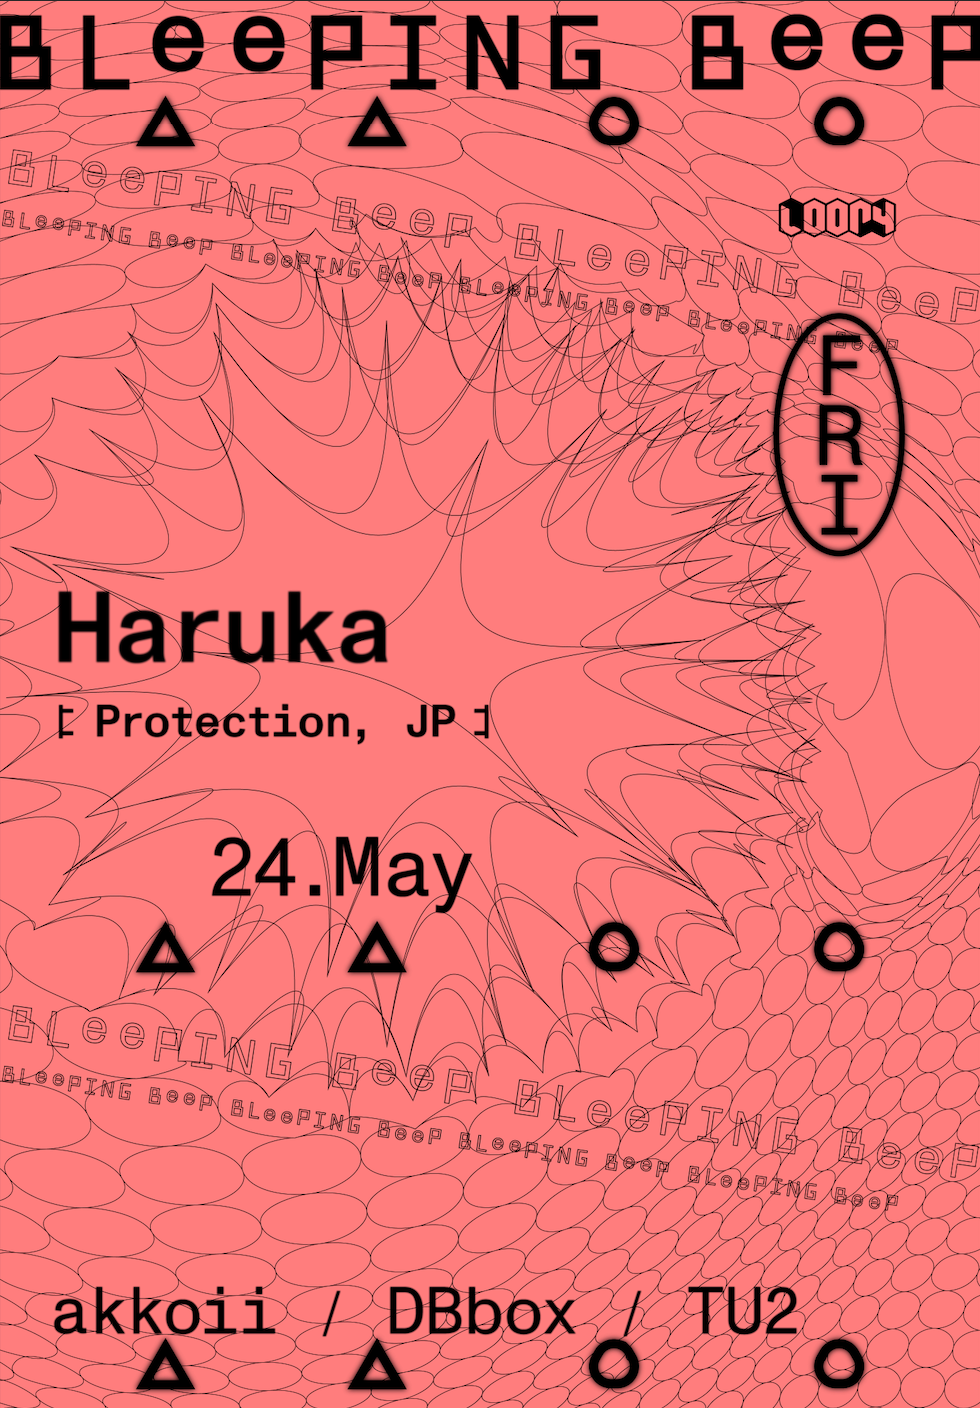 bleeping beep with Haruka [Protection] - フライヤー表